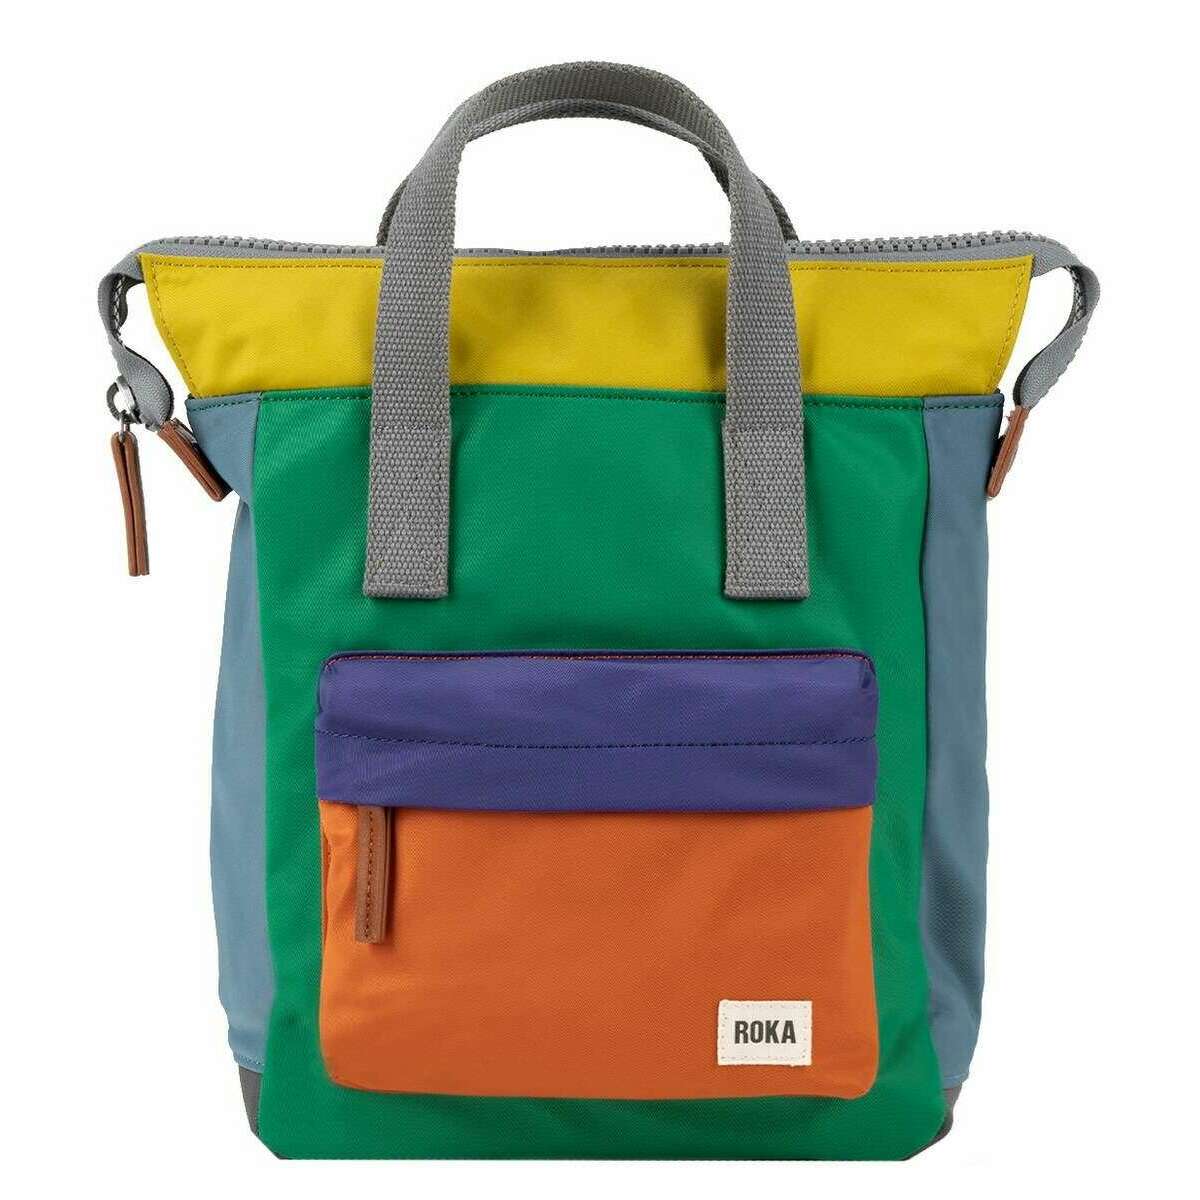 Roka Bantry B Small Creative Waste Colour Block Recycled Nylon Backpack - Green/Yellow/Orange